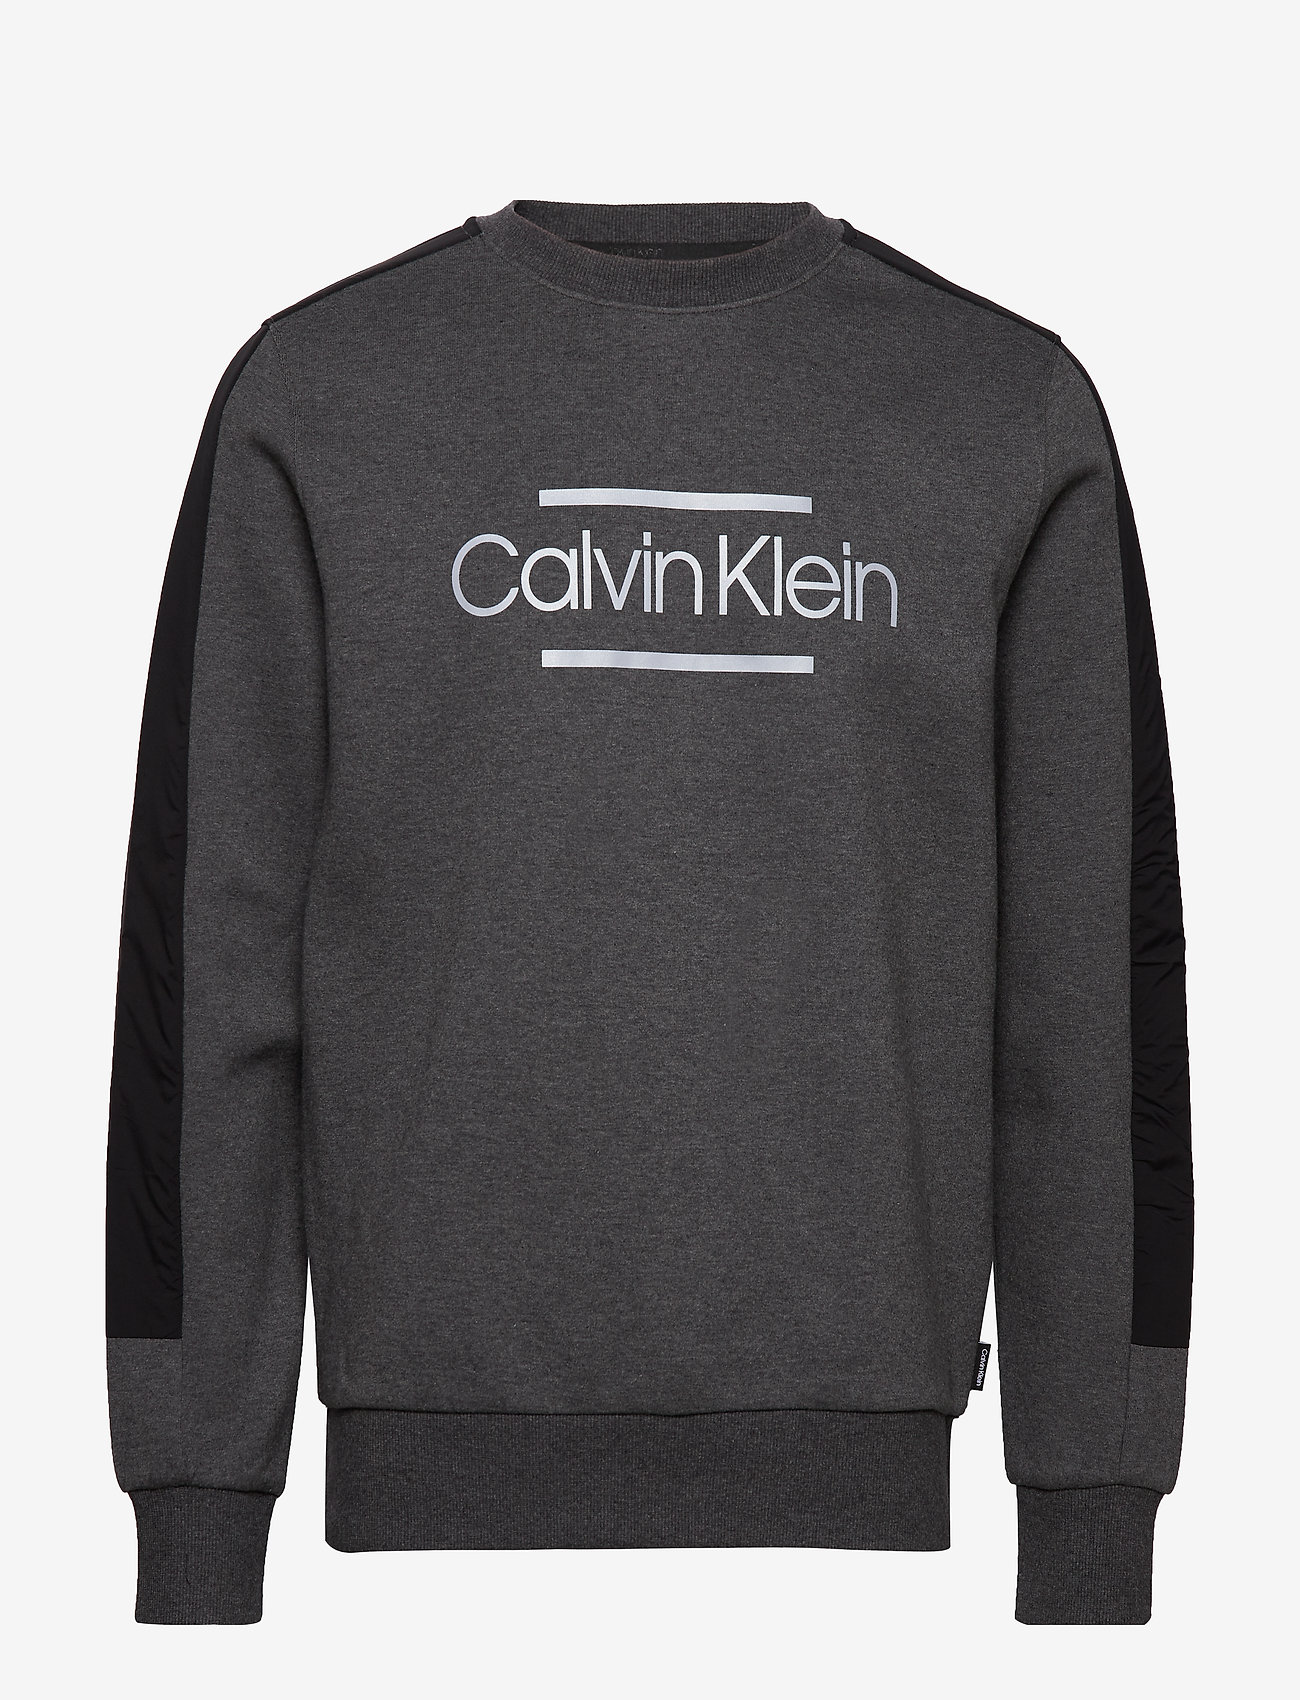 calvin klein black logo sweatshirt